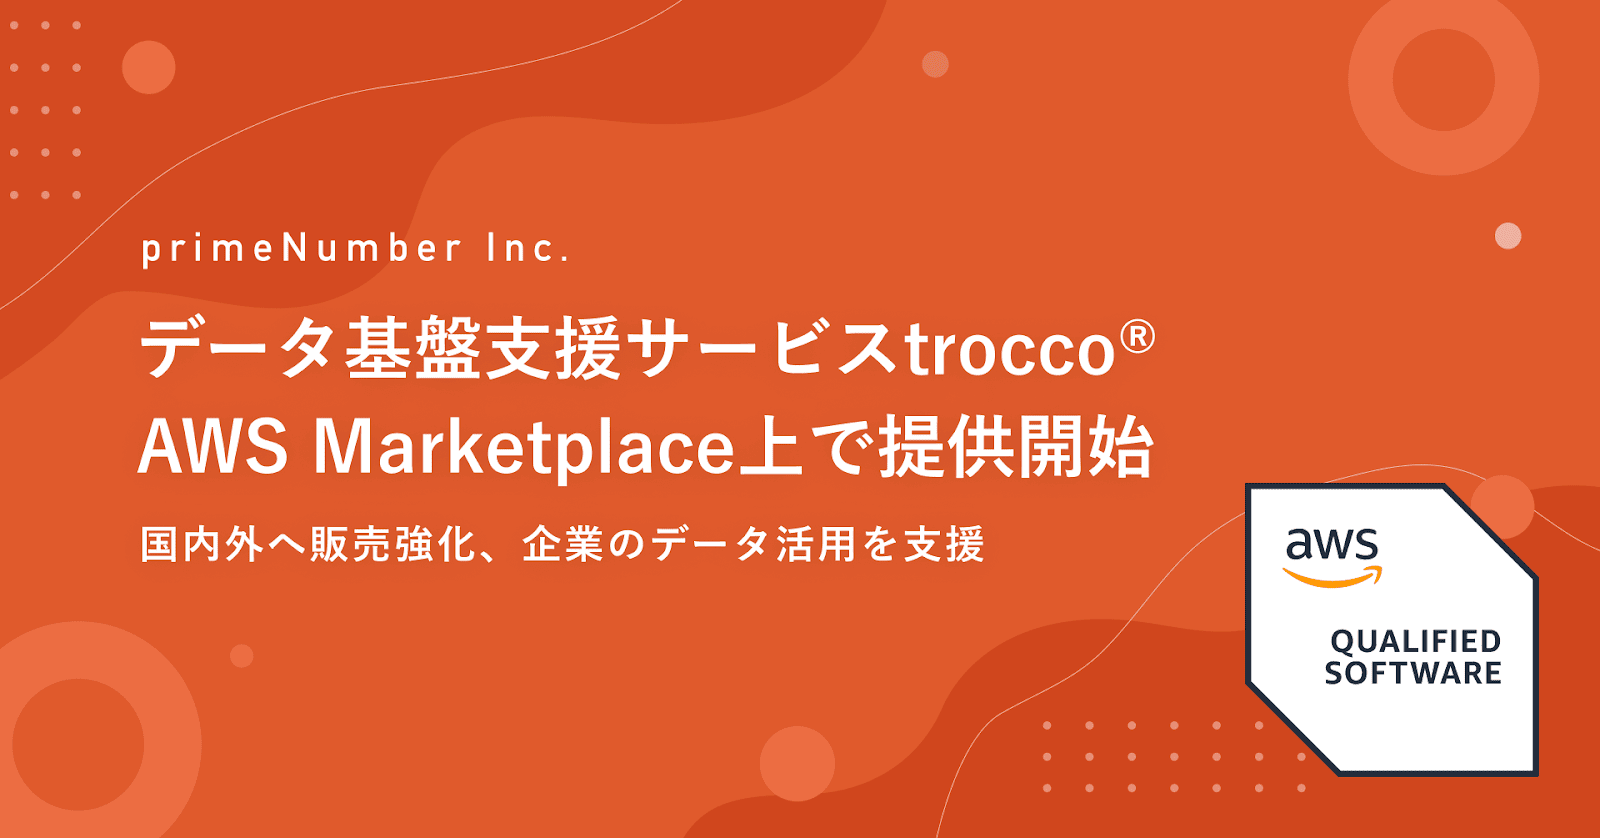 AWS Marketplace上でデータ基盤支援サービス「trocco」の提供を開始